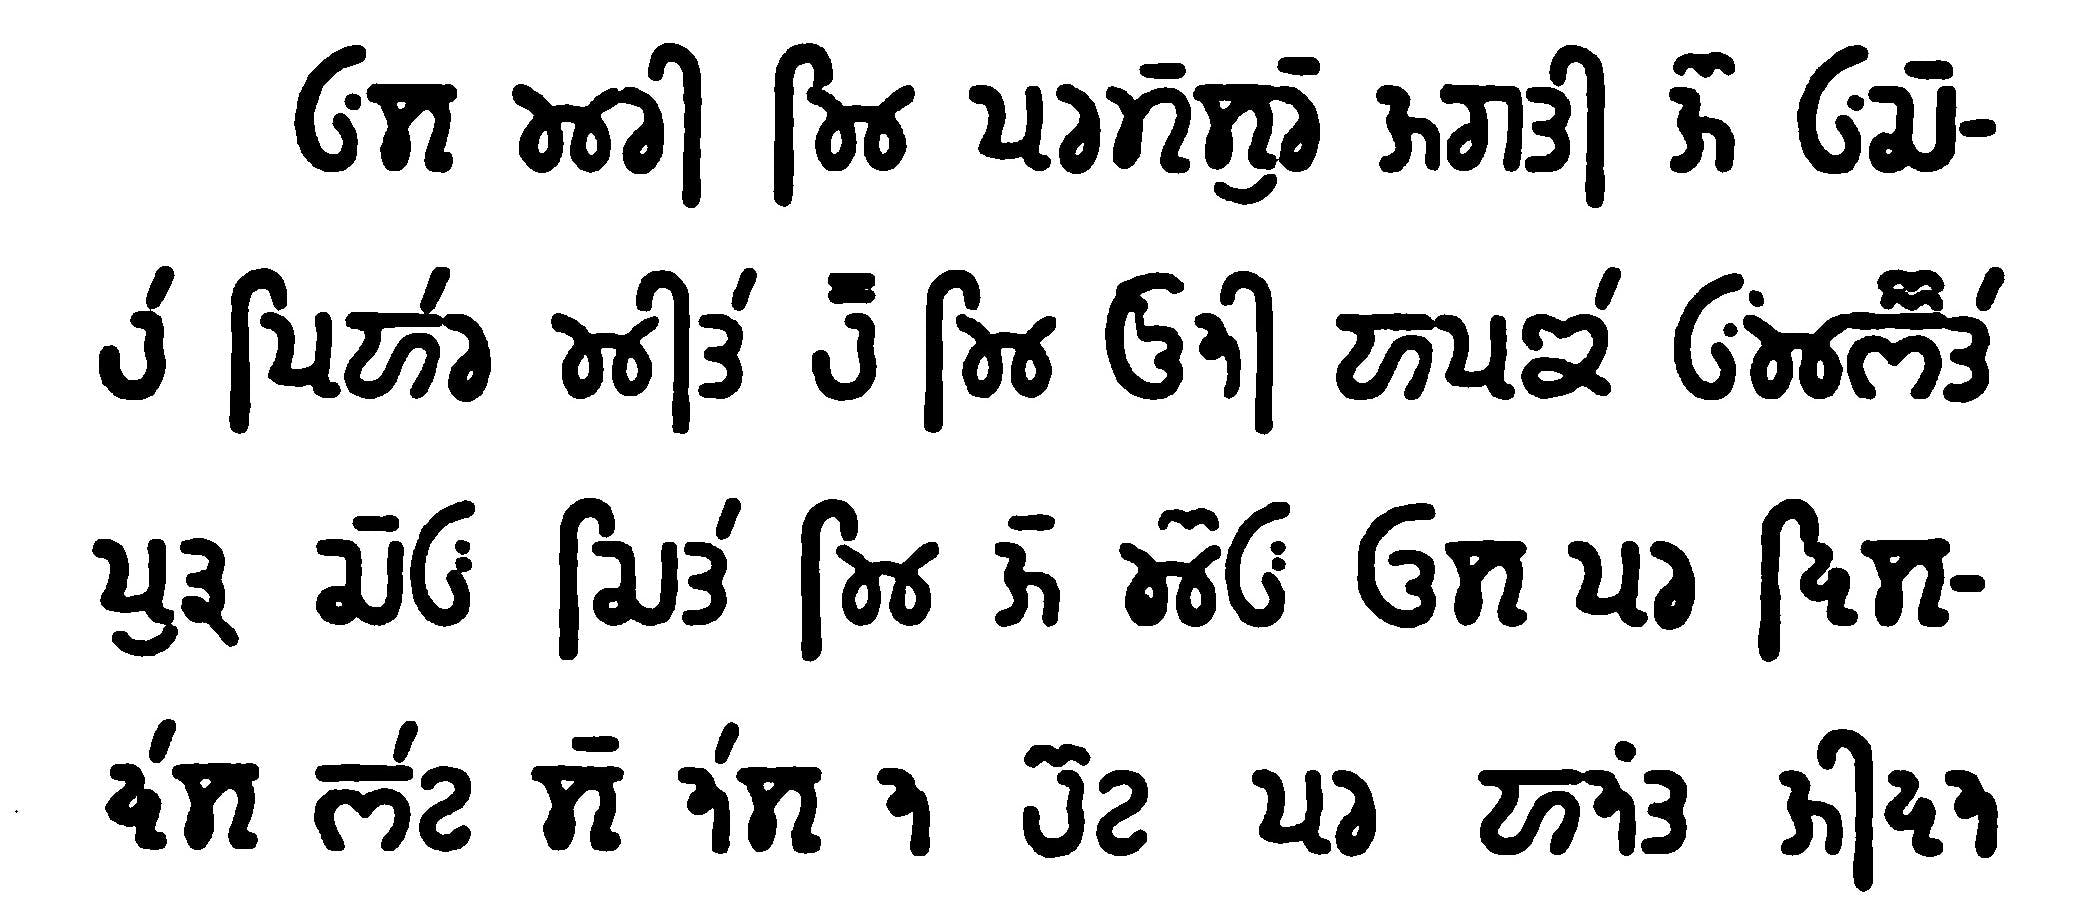 Printed sample of the Ṭākrī script